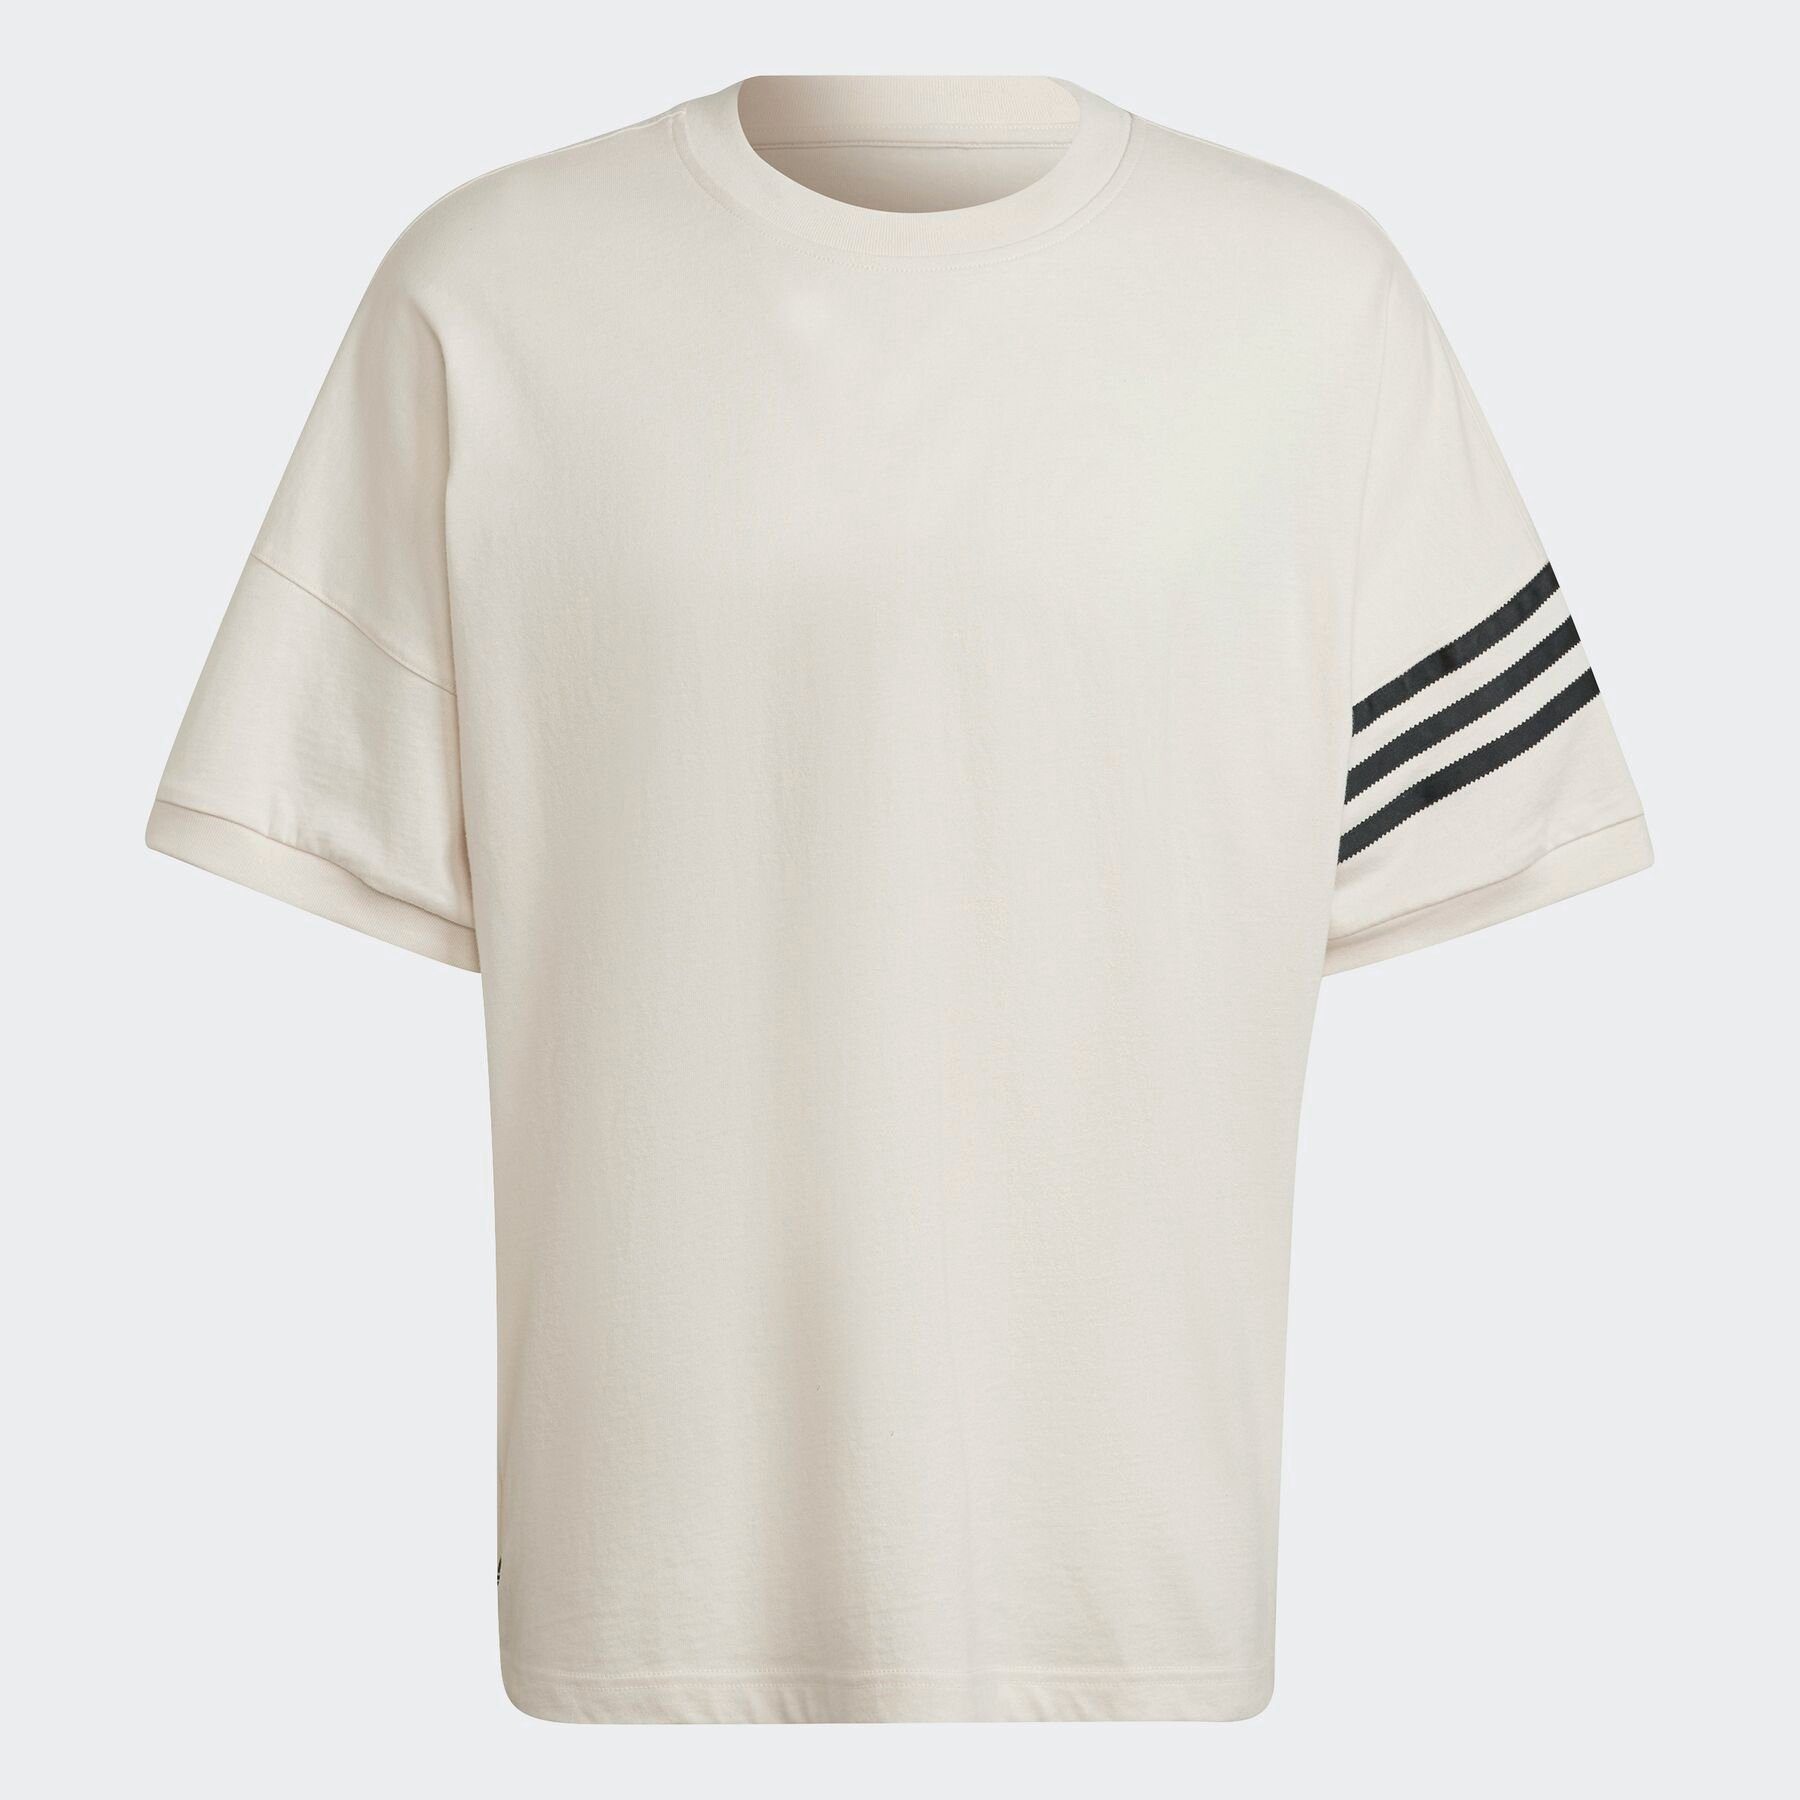 ADICOLOR NEUCLASSICS Wonder Originals Performance T-Shirt adidas adidas White